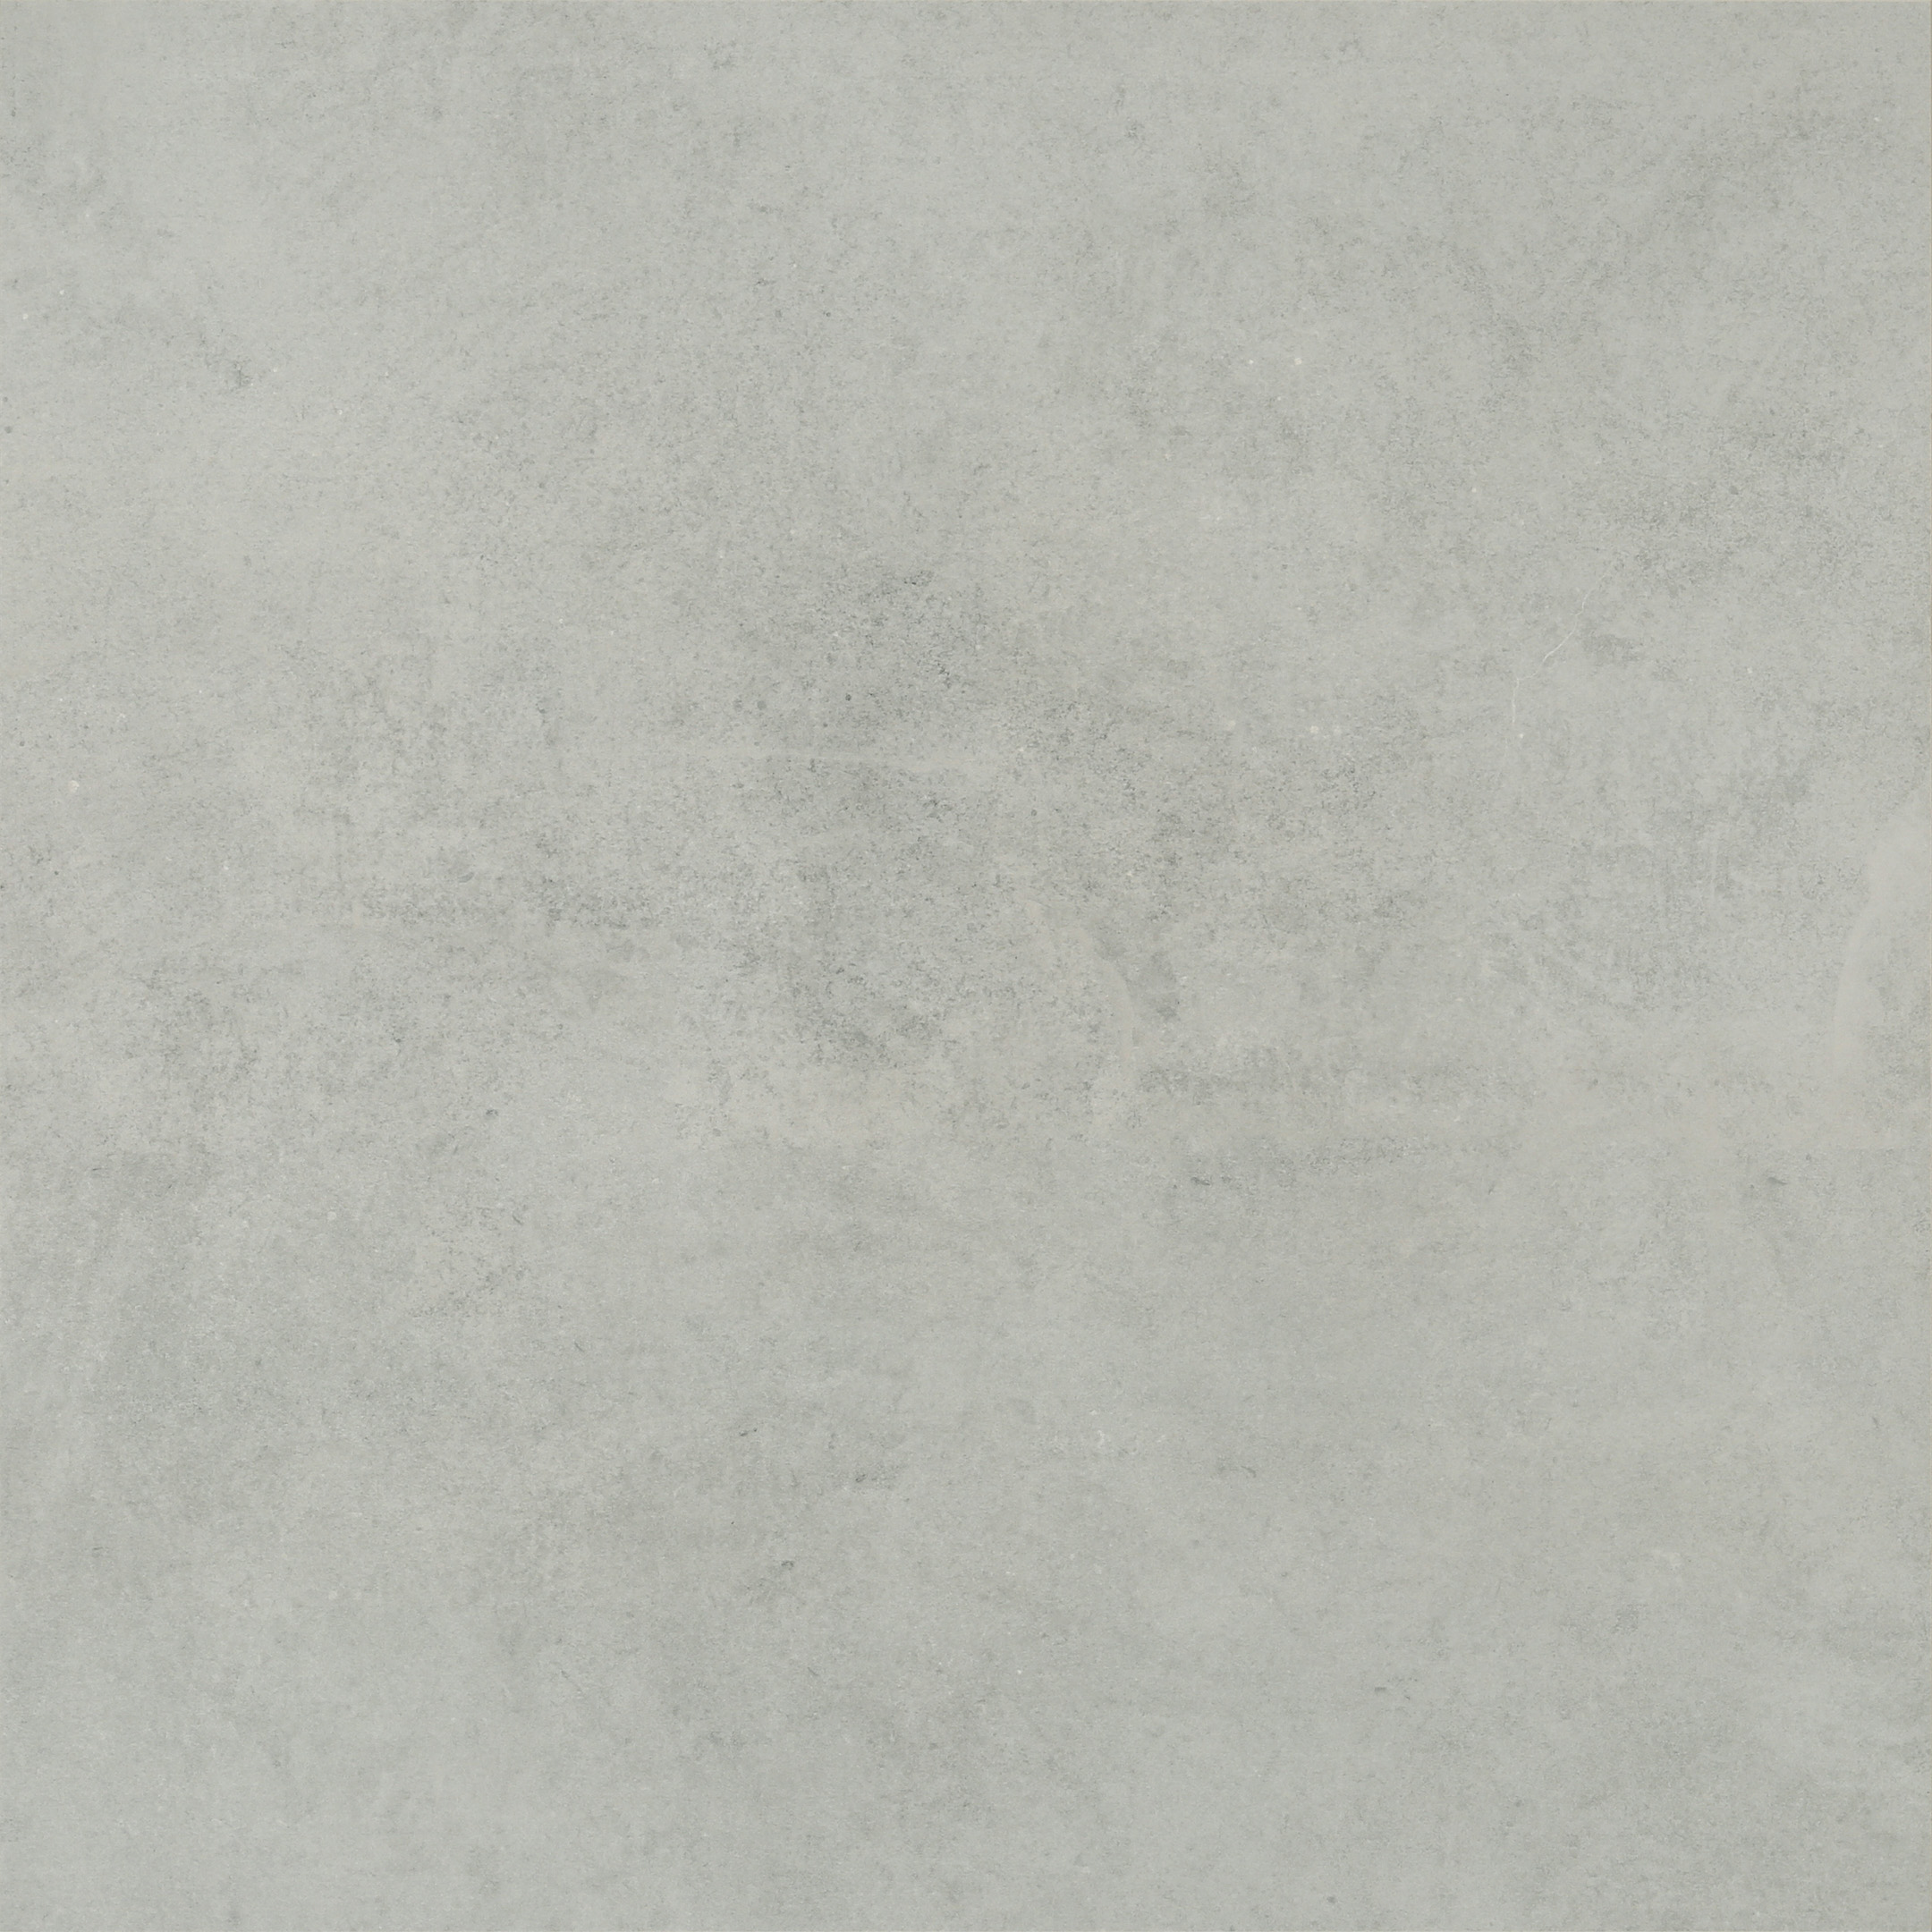 фото Керамогранит уг гранитея таганай светло-серый g341 матовый 600х600х10 мм (4 шт.=1,44 кв.м)